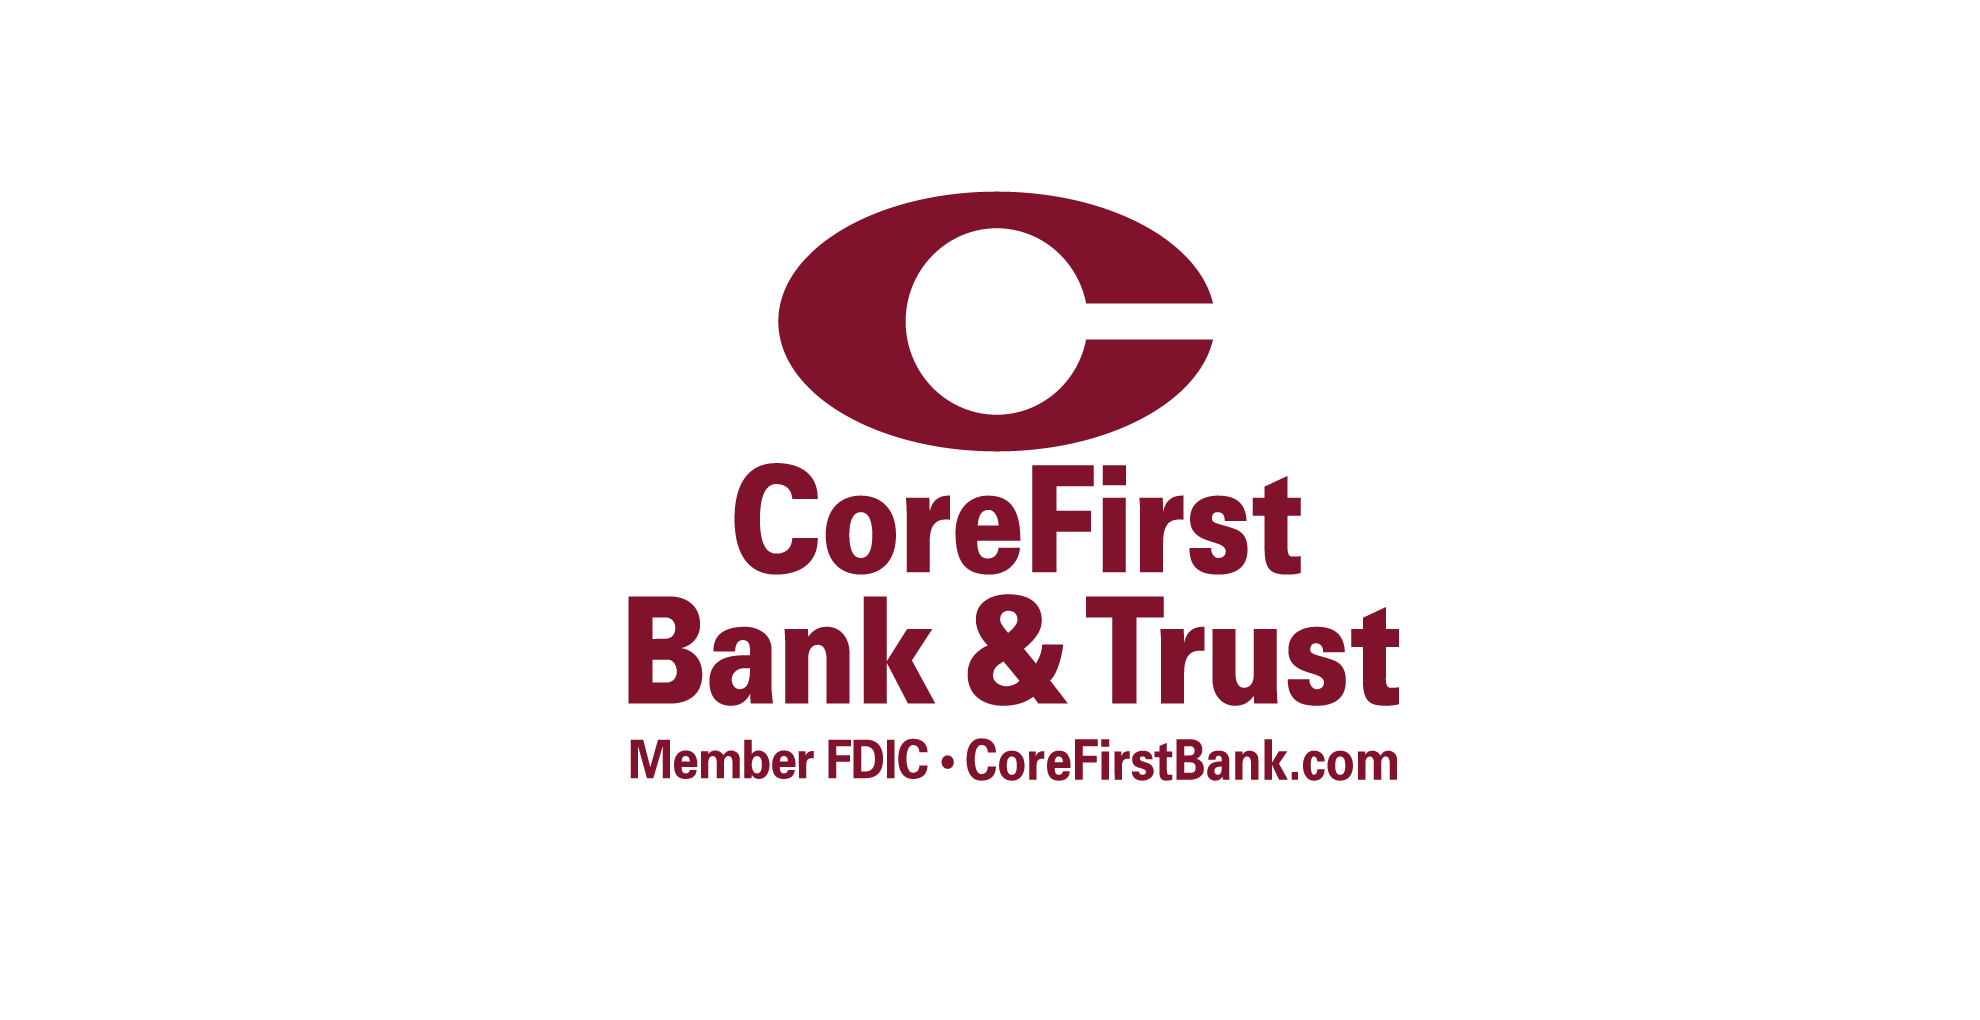 CoreFirst Bank